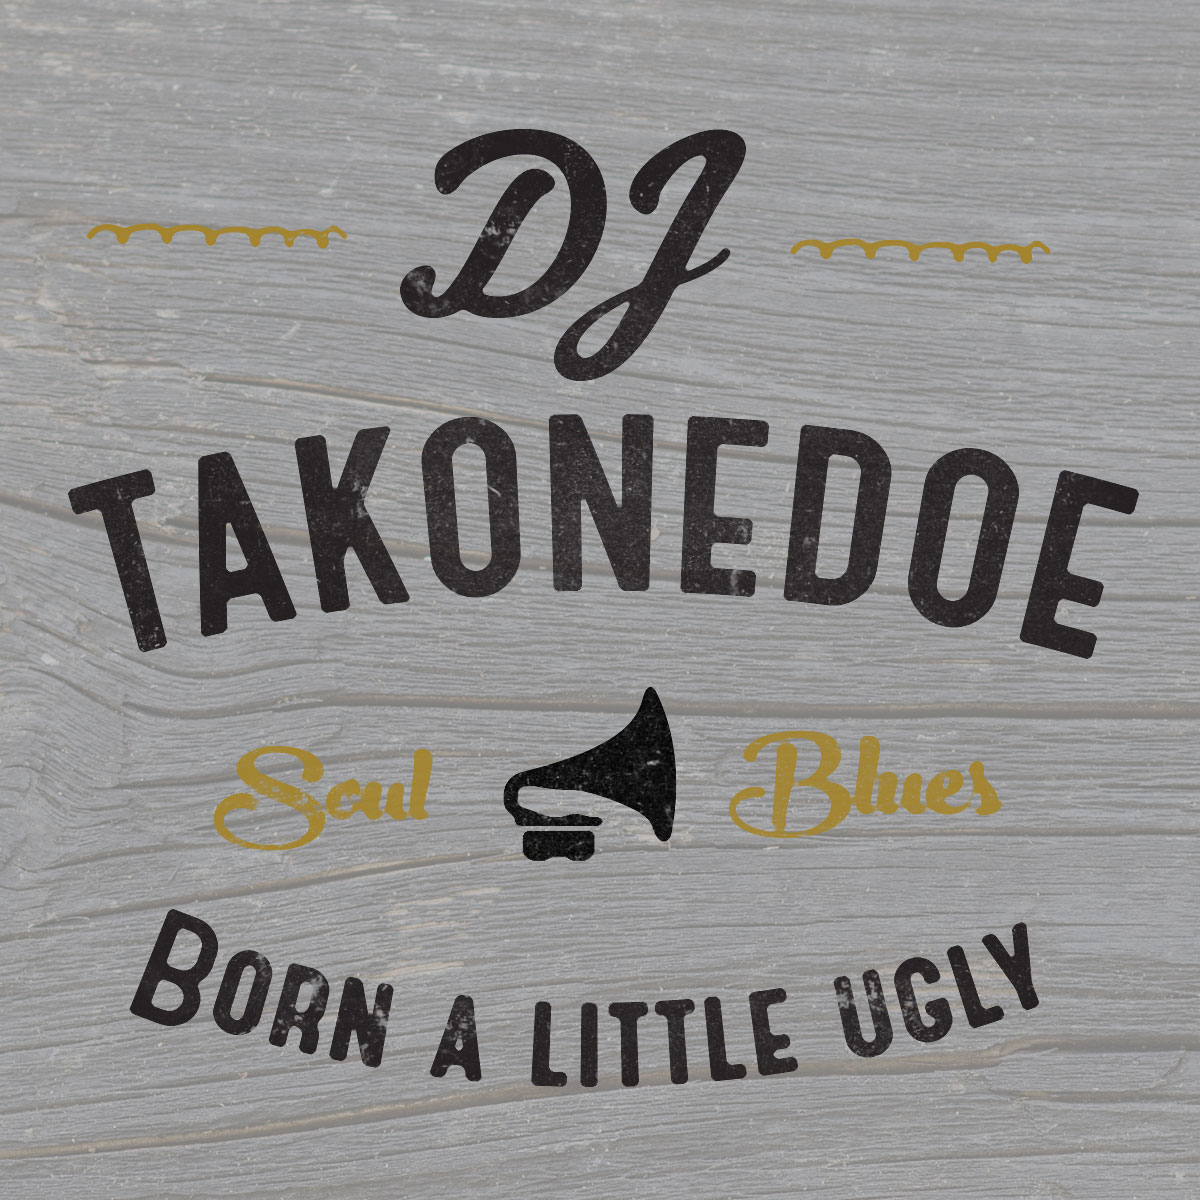 DJ Takonedoe - Born A Little Ugly